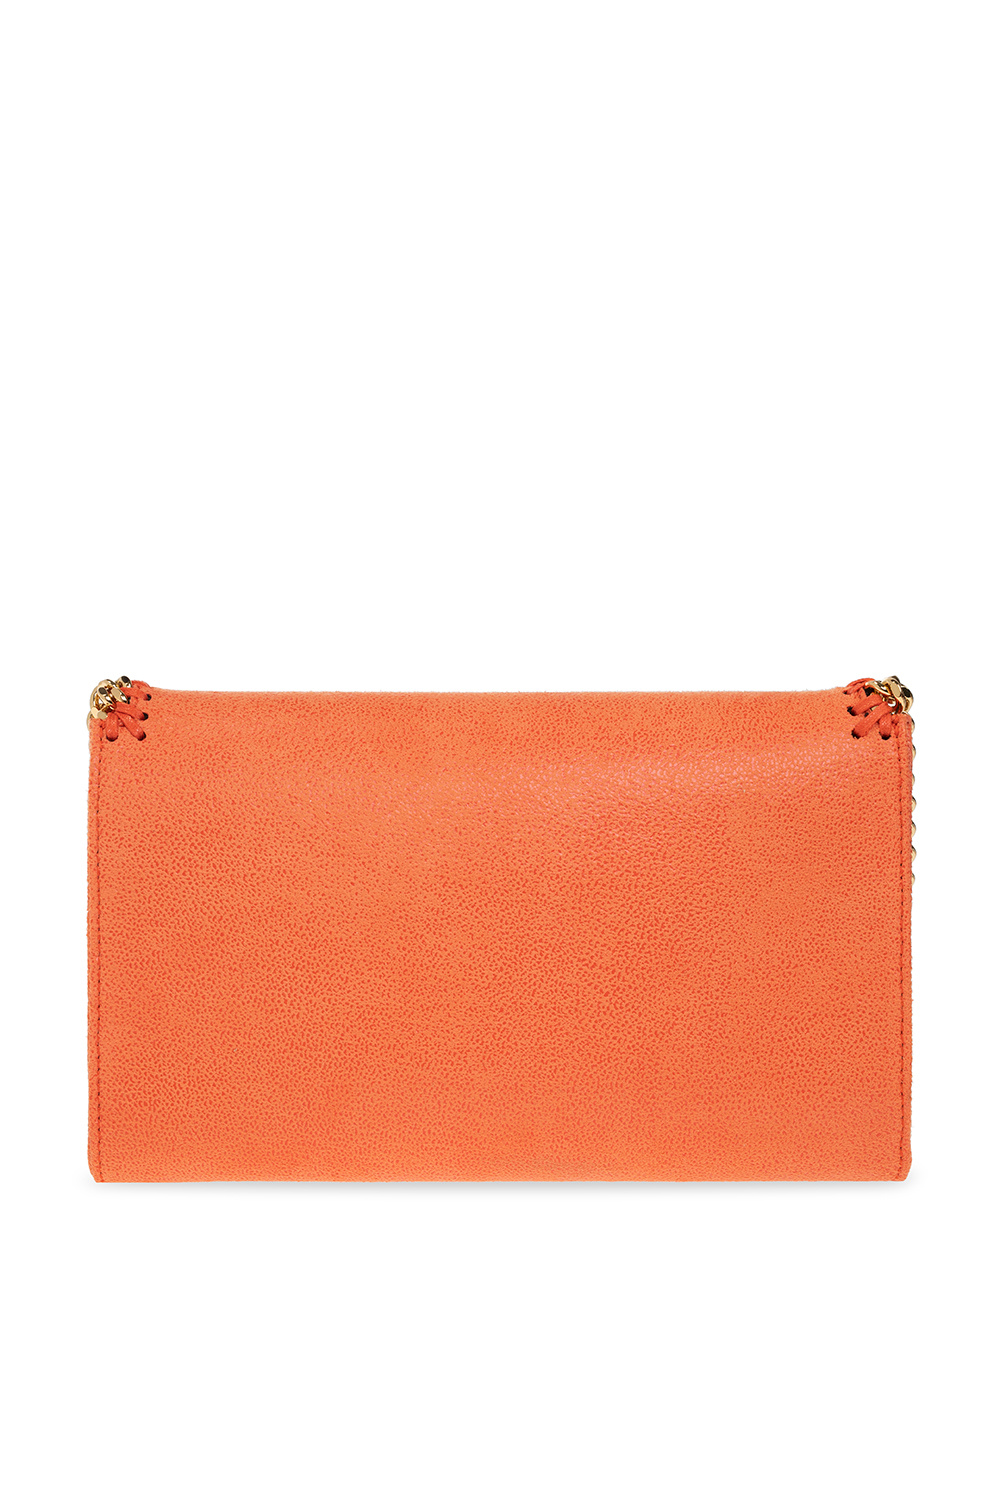 Orange ‘Falabella Mini’ shoulder bag Stella McCartney - Vitkac GB